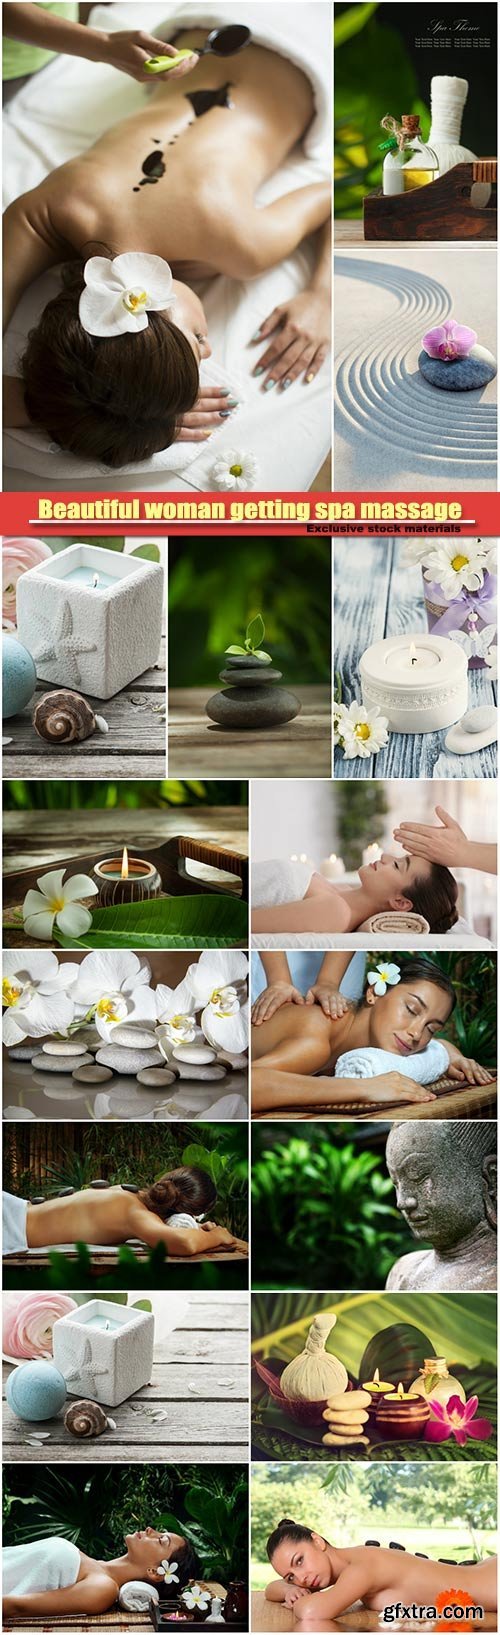 Beautiful woman getting spa massage in spa salon, spa background